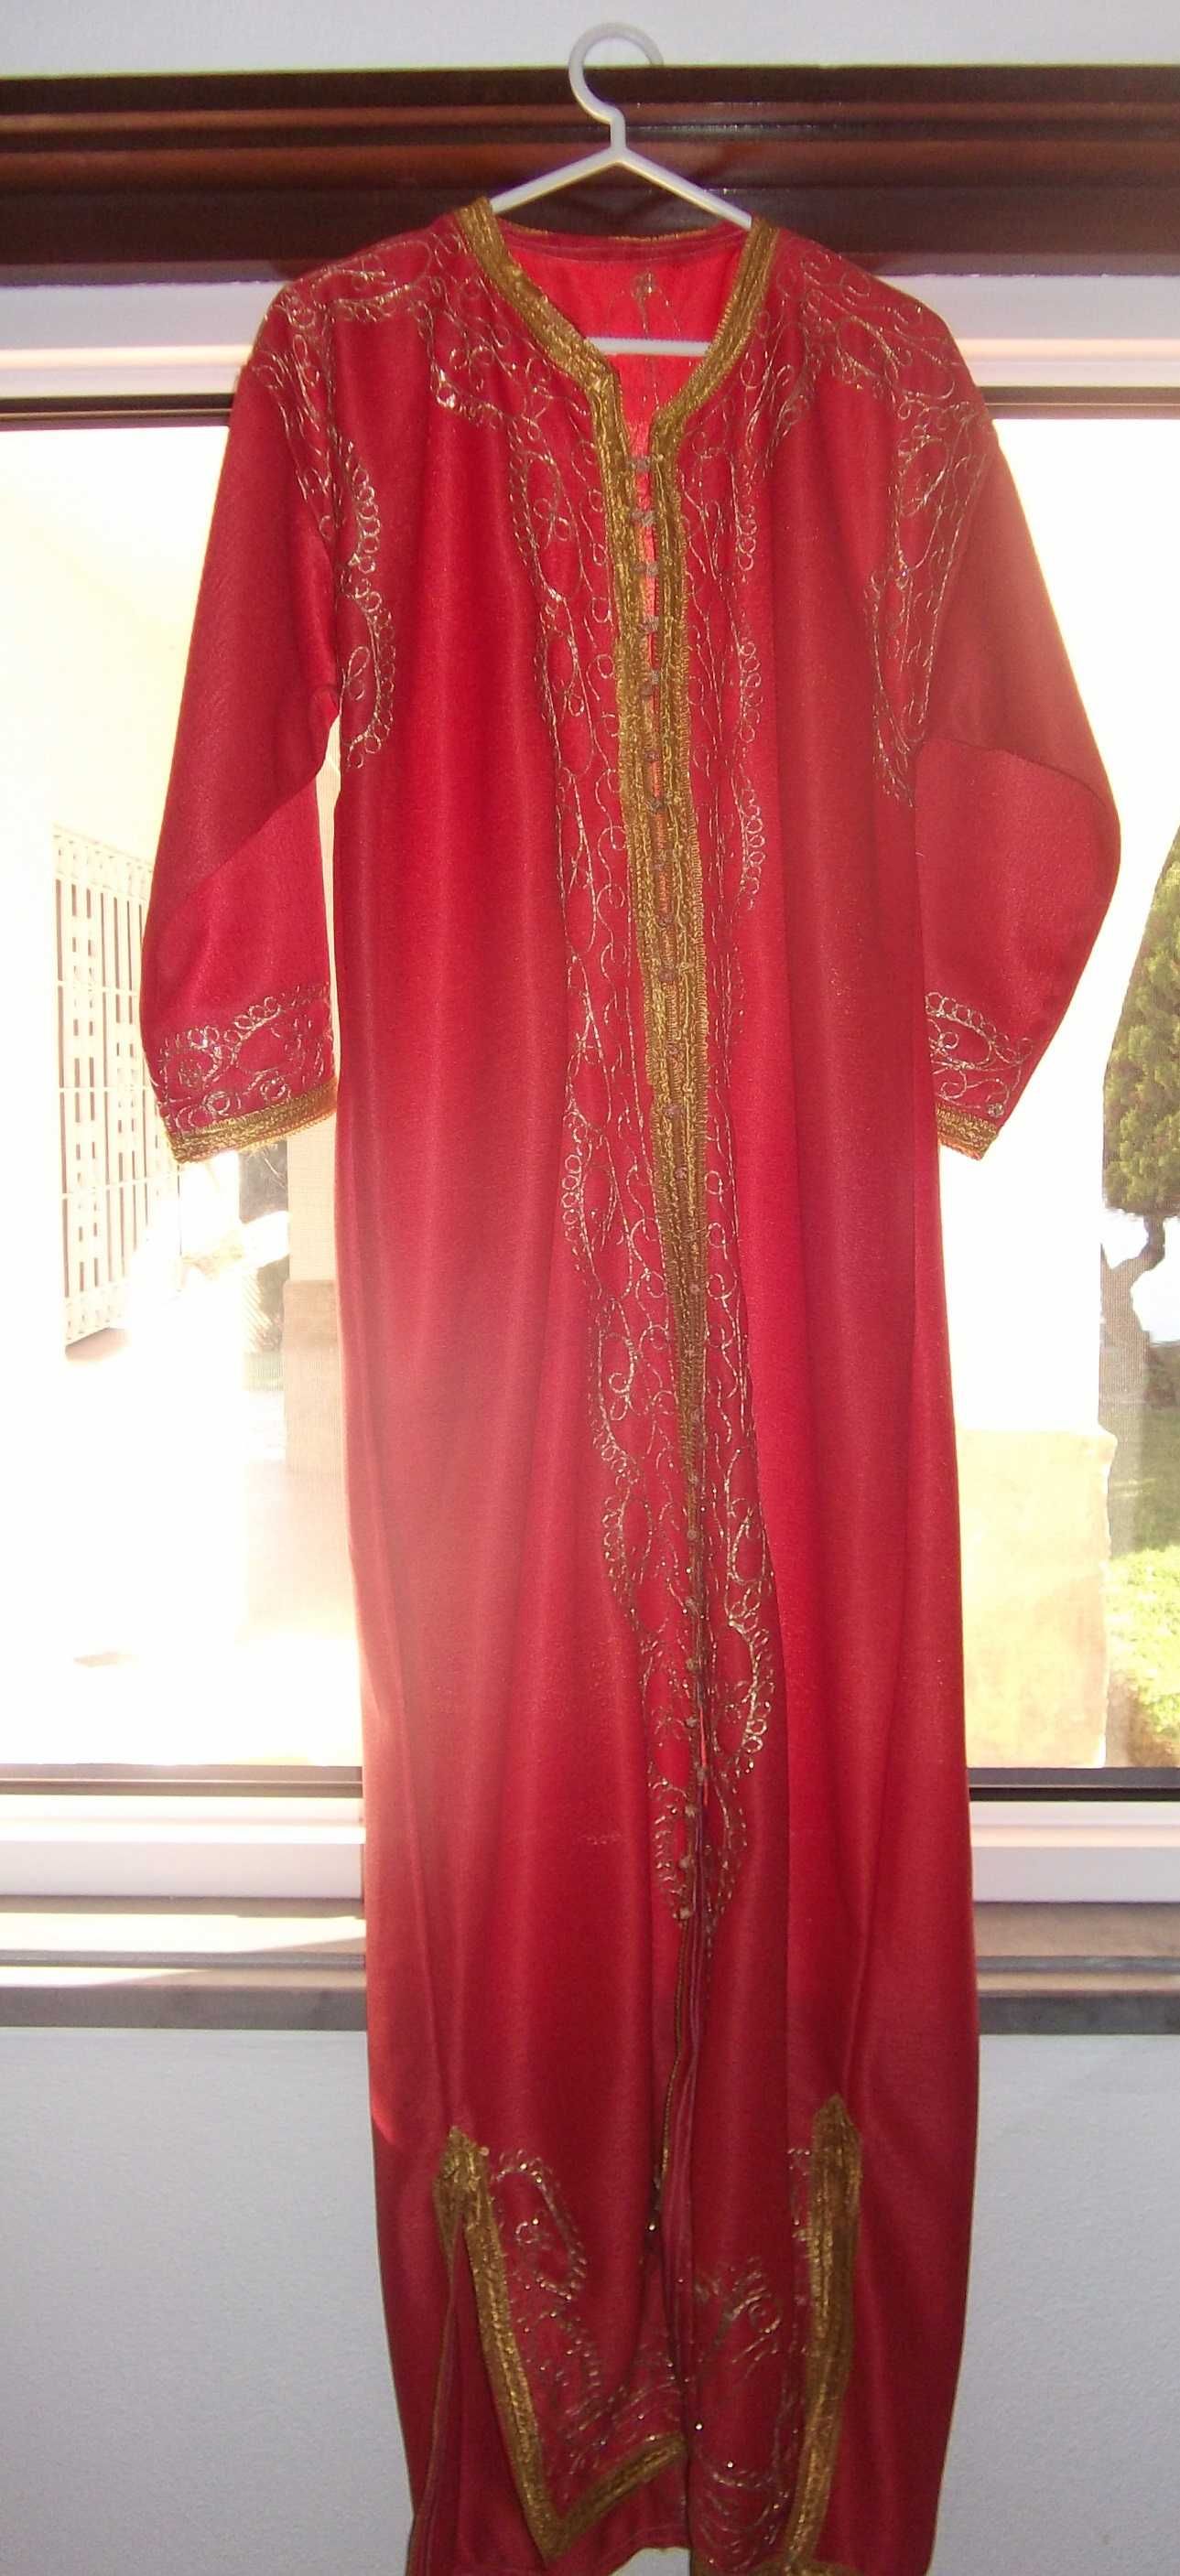 Túnica marroquina vermelha / Red moroccan tunic – Size L / XL